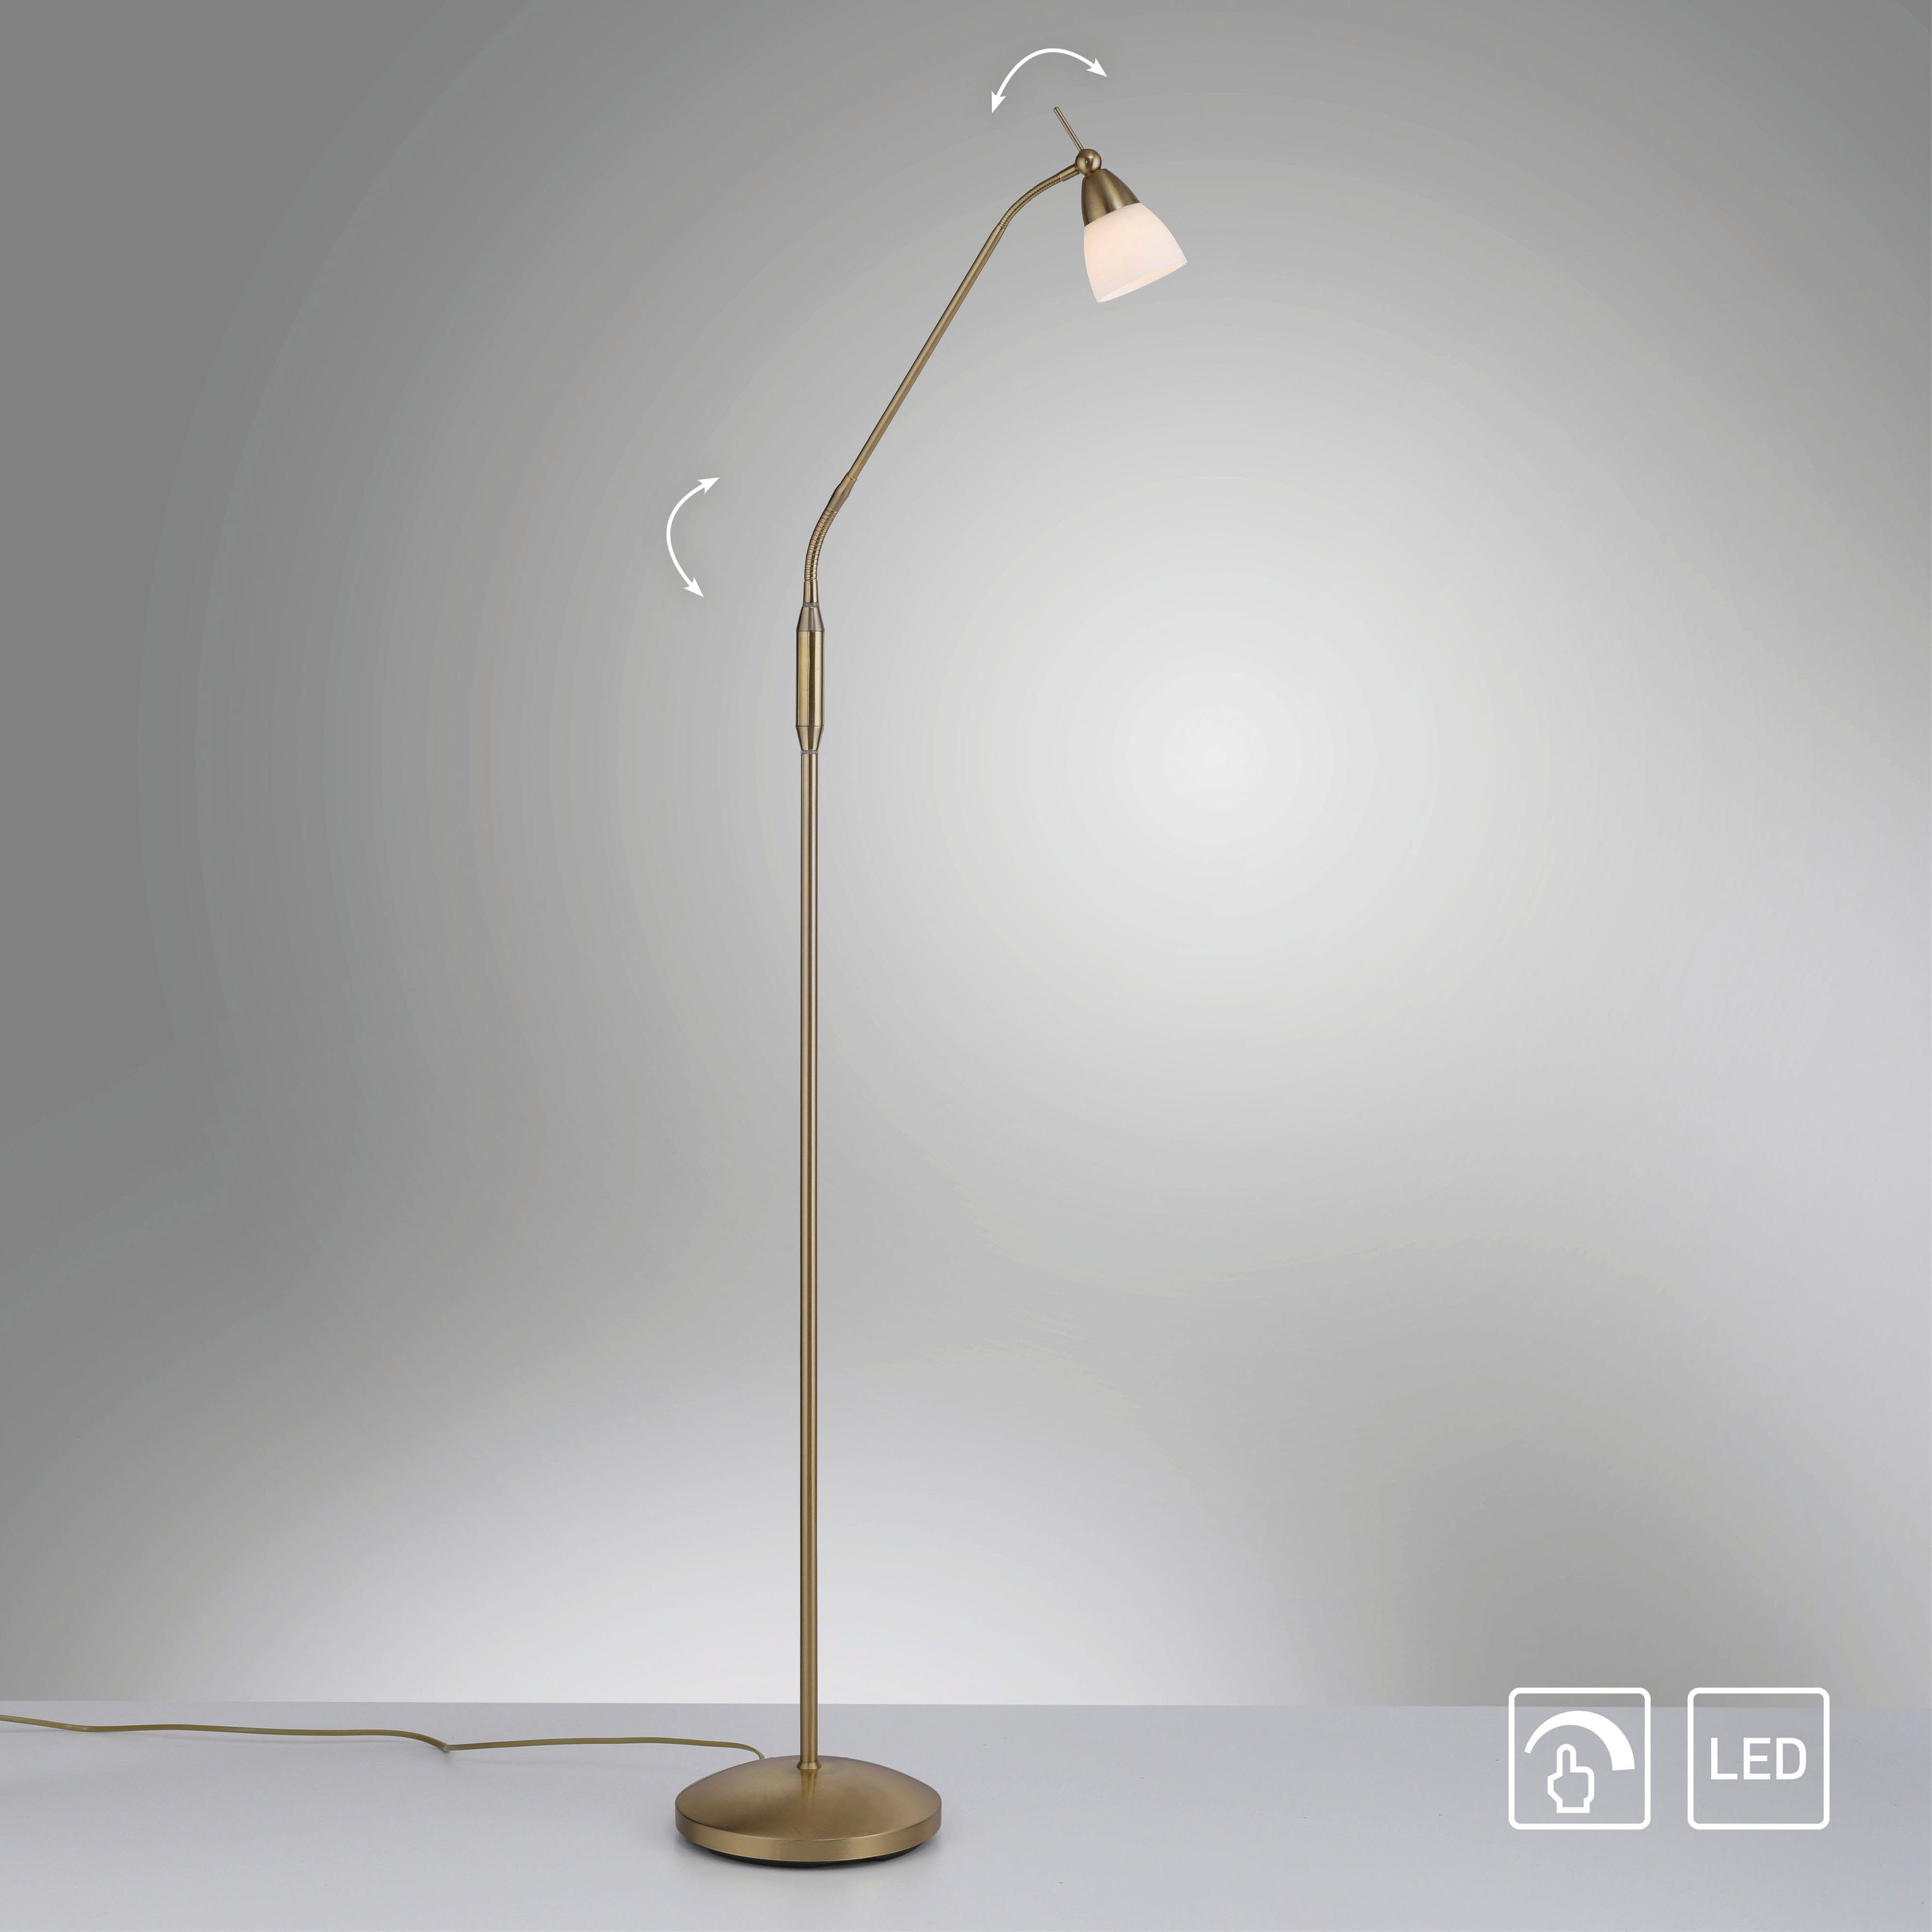 Paul Neuhaus Stehlampe PINO, LED wechselbar, Warmweiß, 3000K - Warmweißes  LED Leuchtmittel